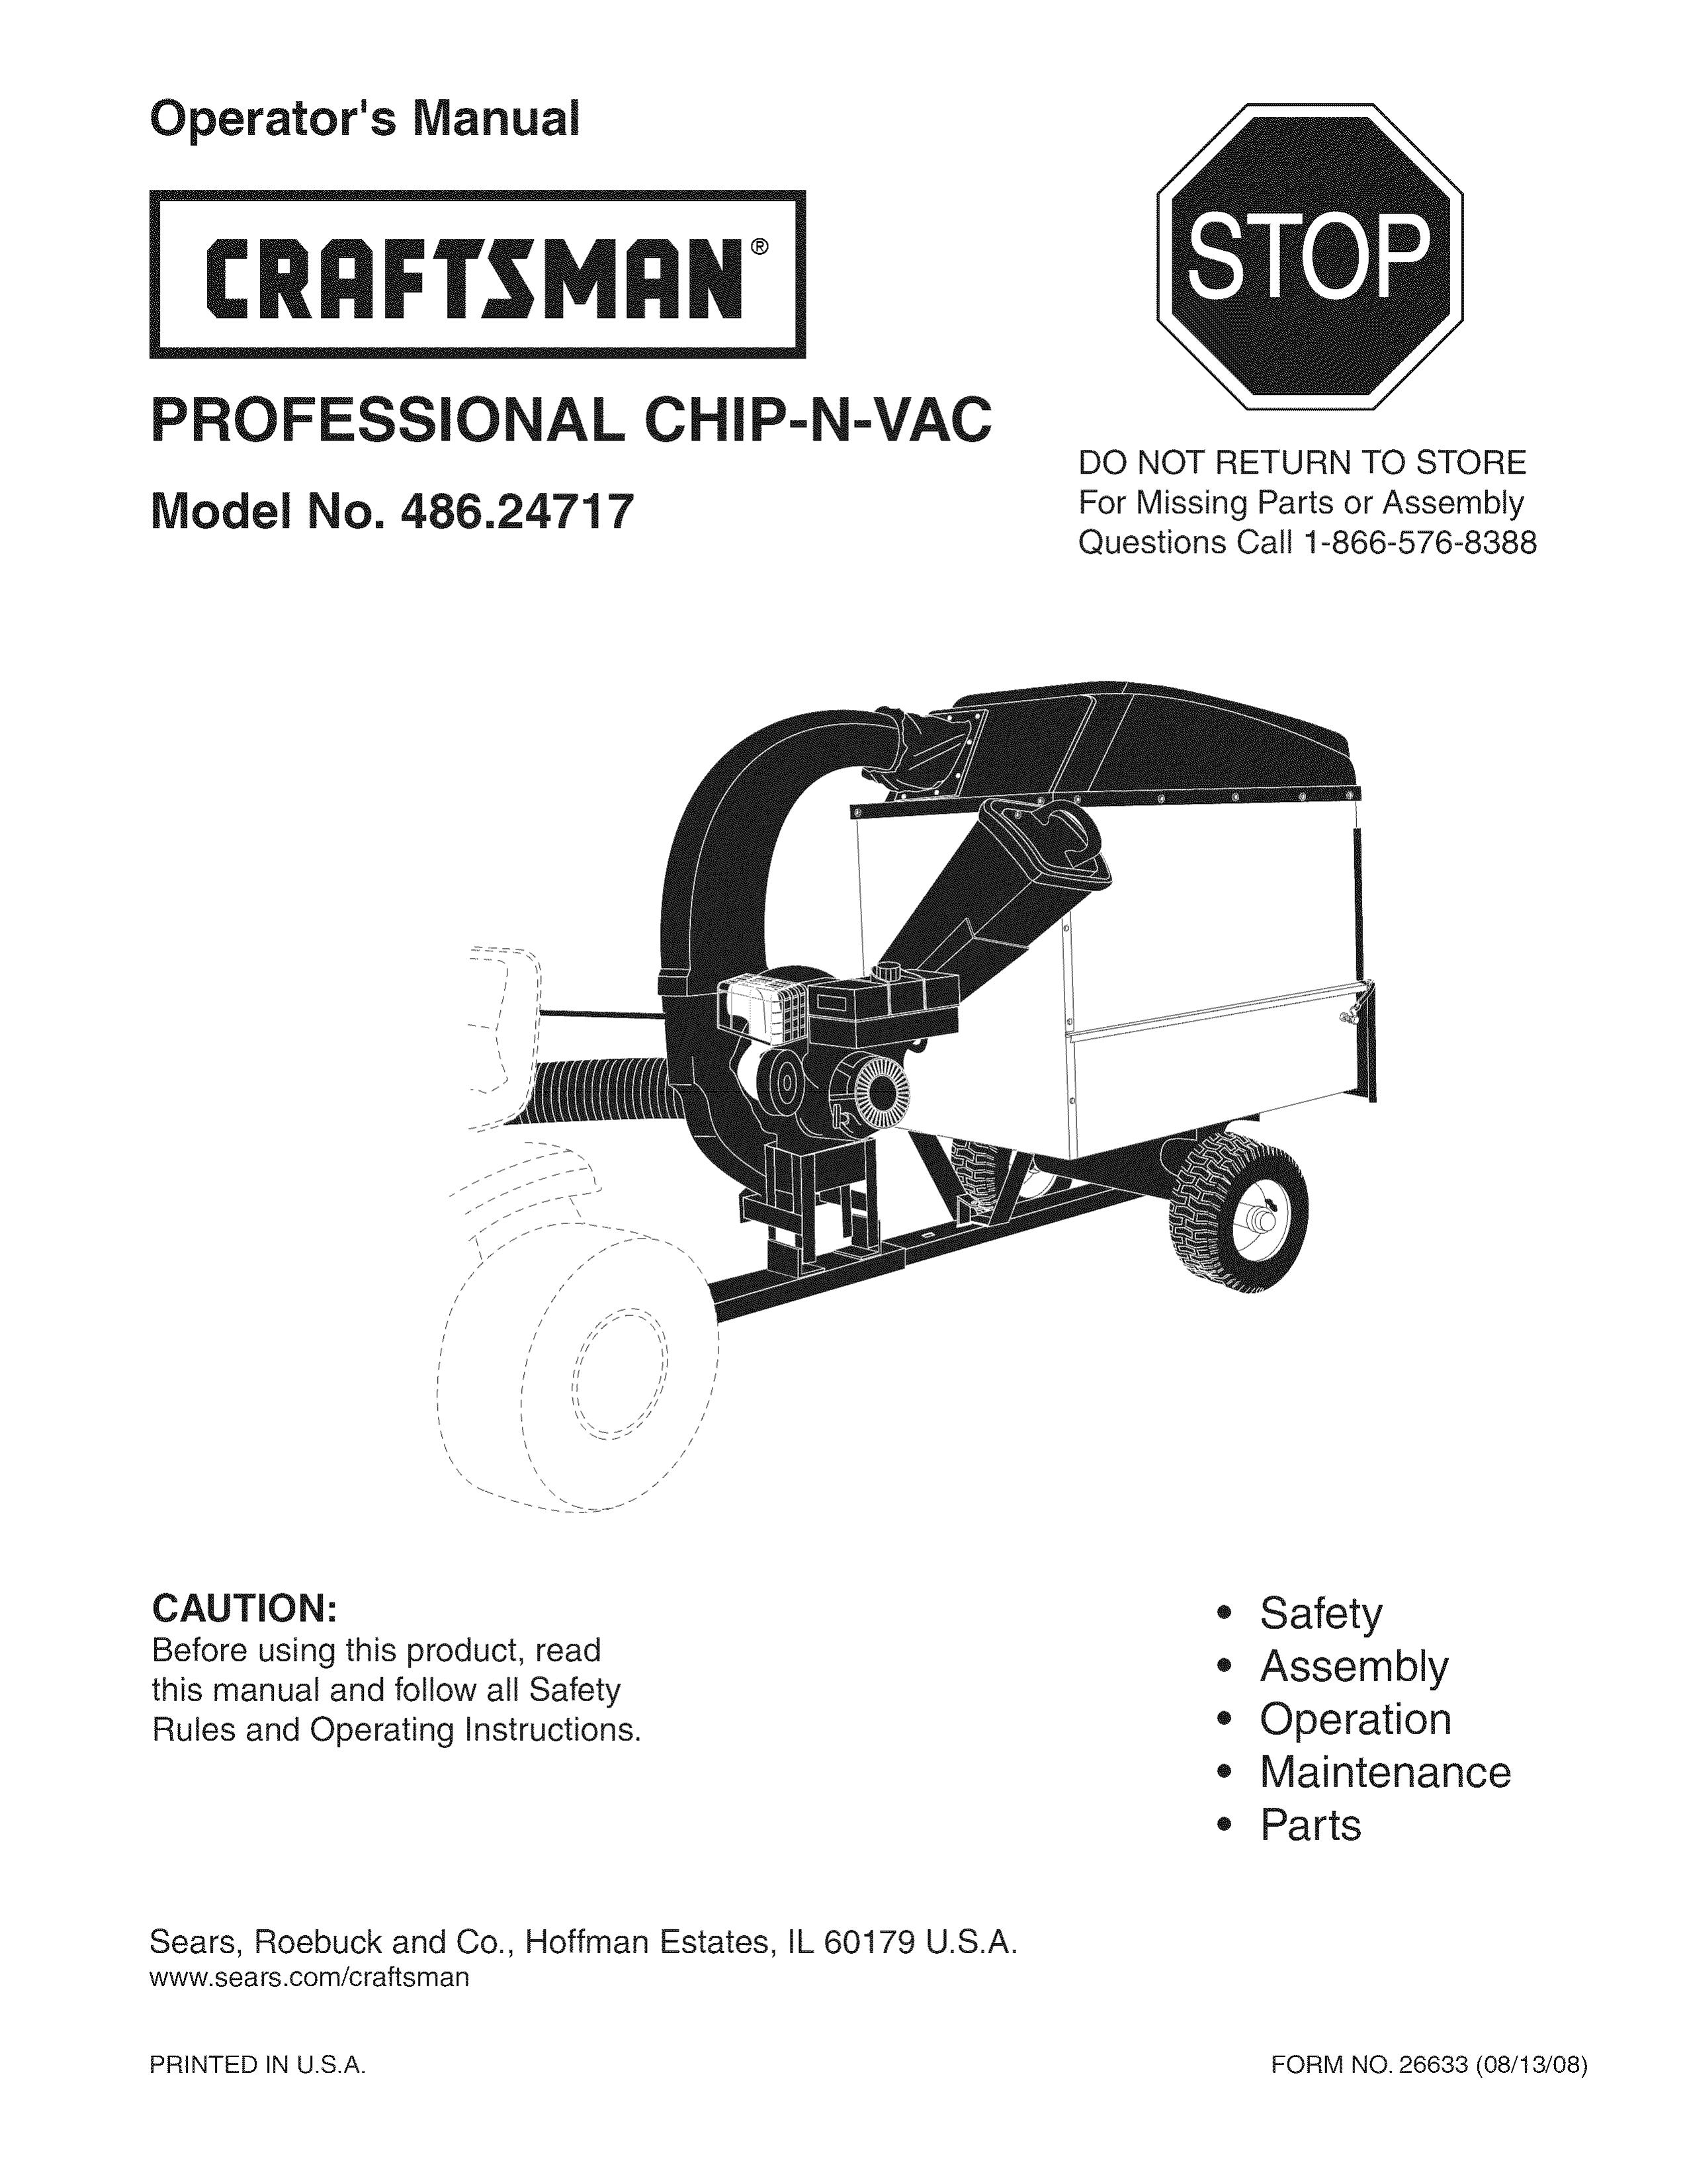 Craftsman 486.24717 Chipper User Manual